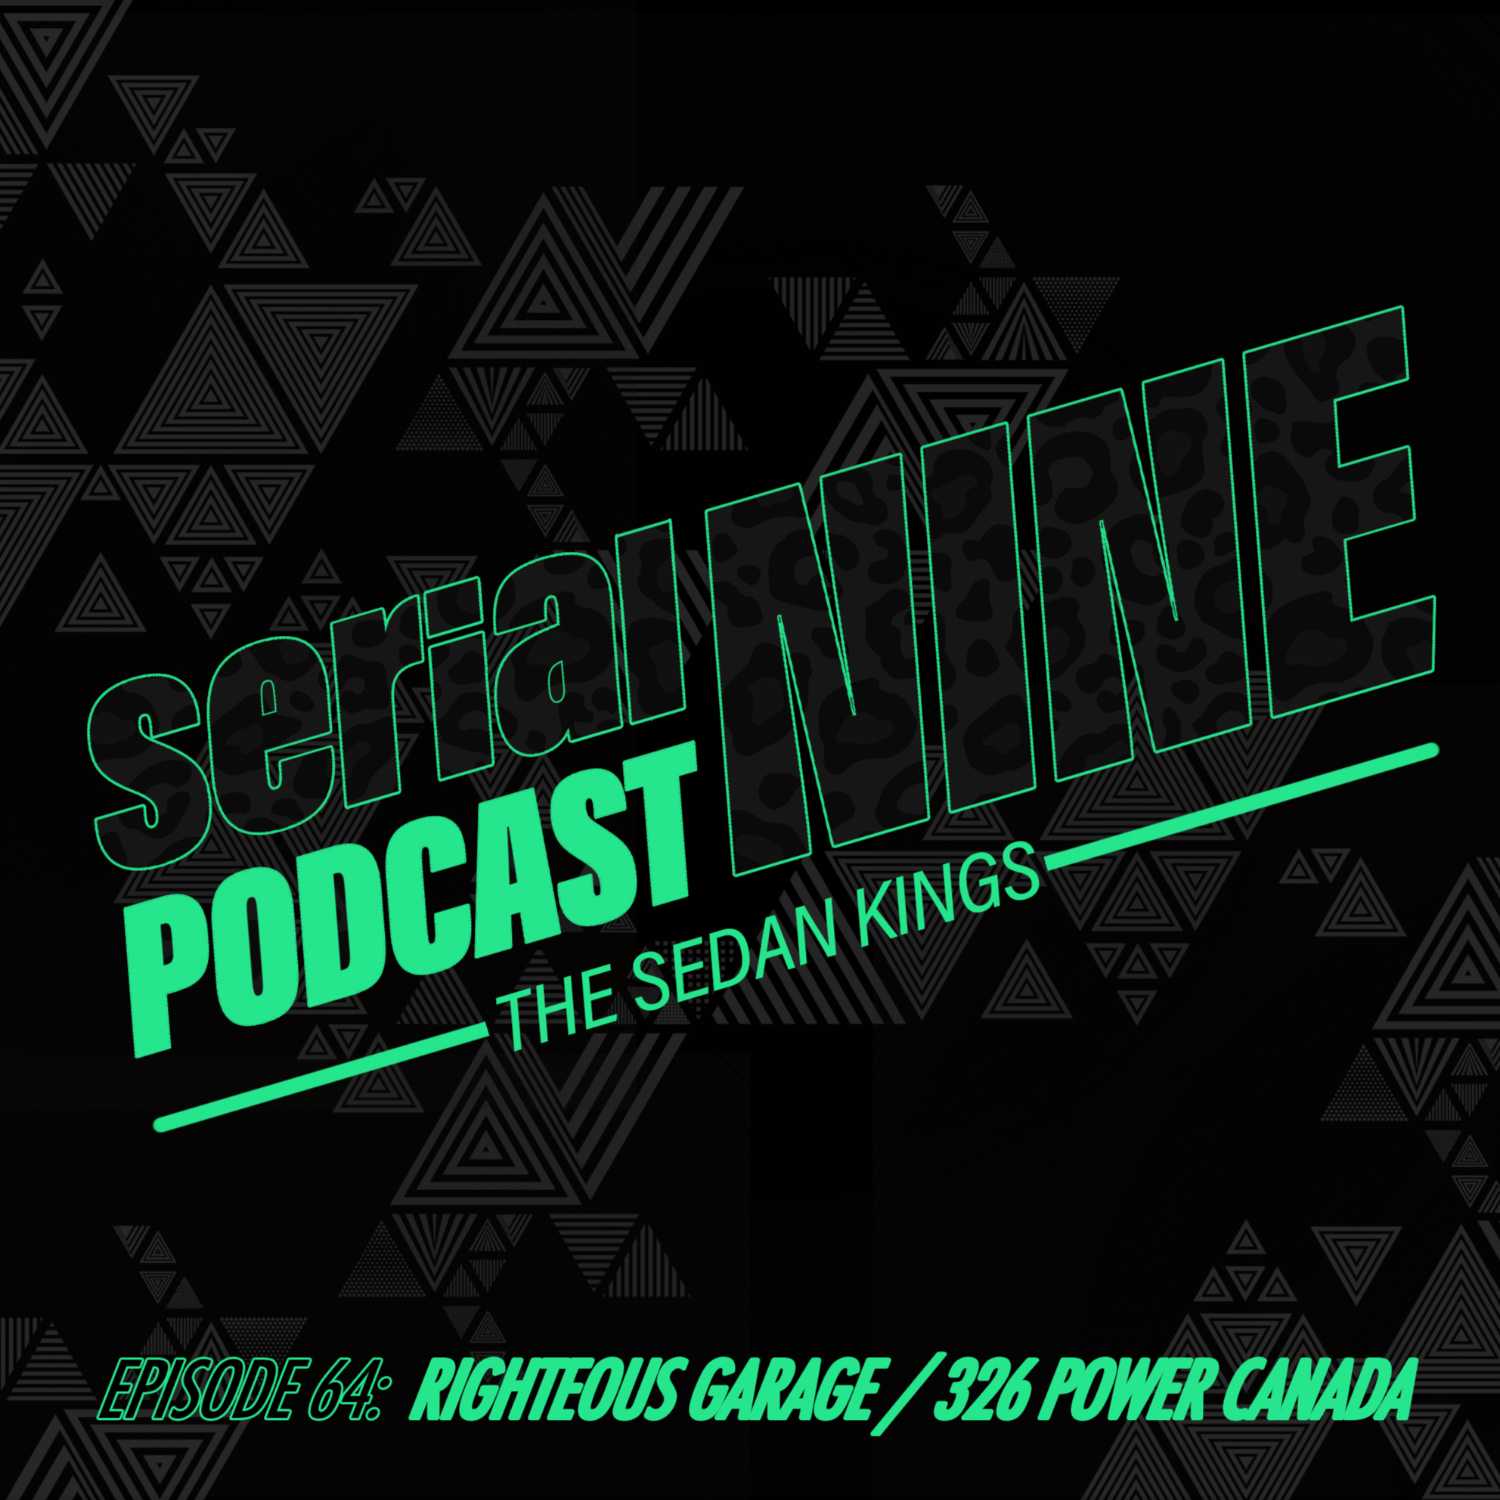 SerialPodcastNine Episode 64 Righteous Garage / 326 Power Canada